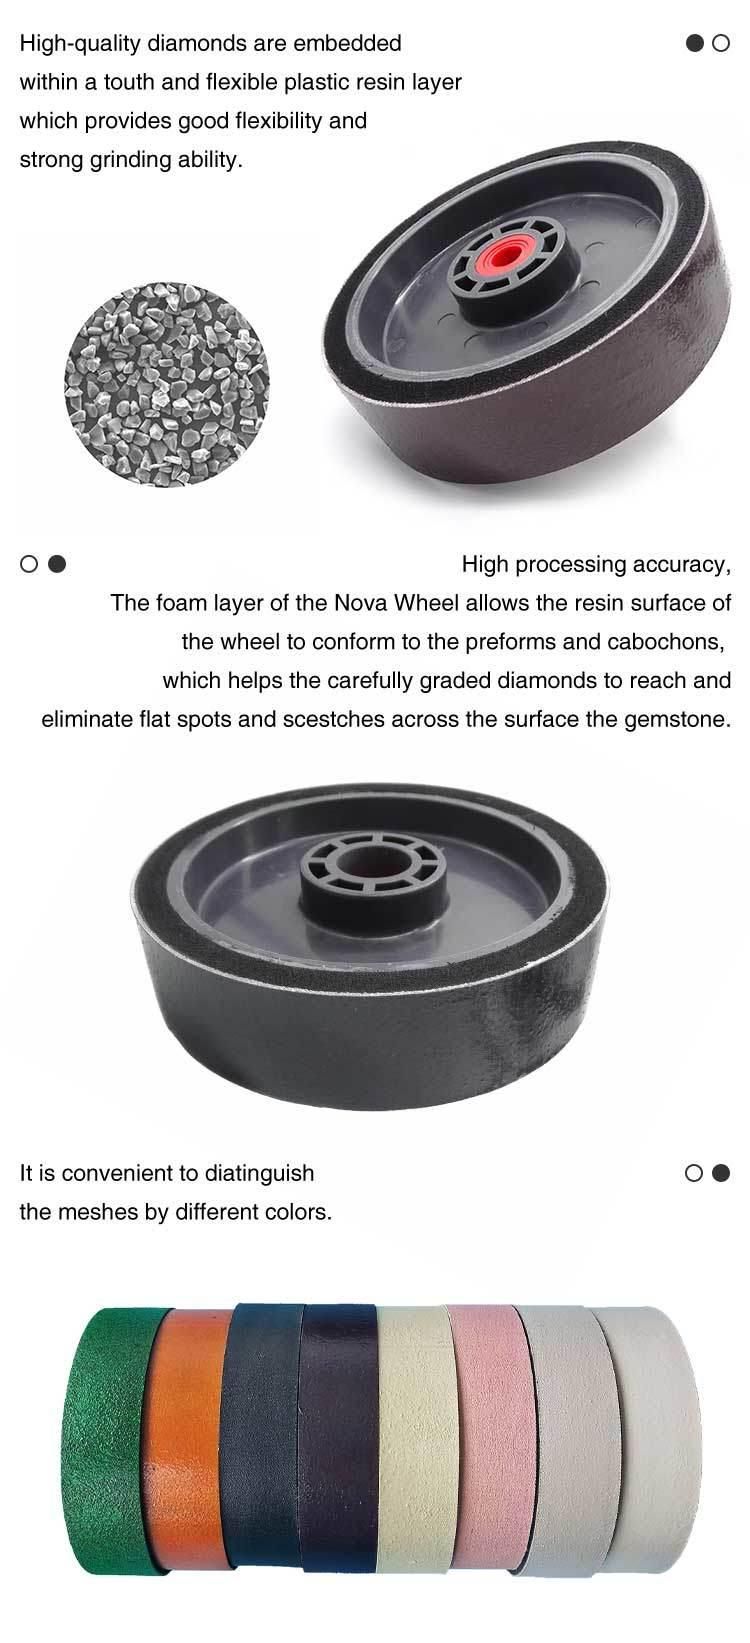 Round Flexible Grinding Wheel Diamond Super Nova Lapidary Wheel